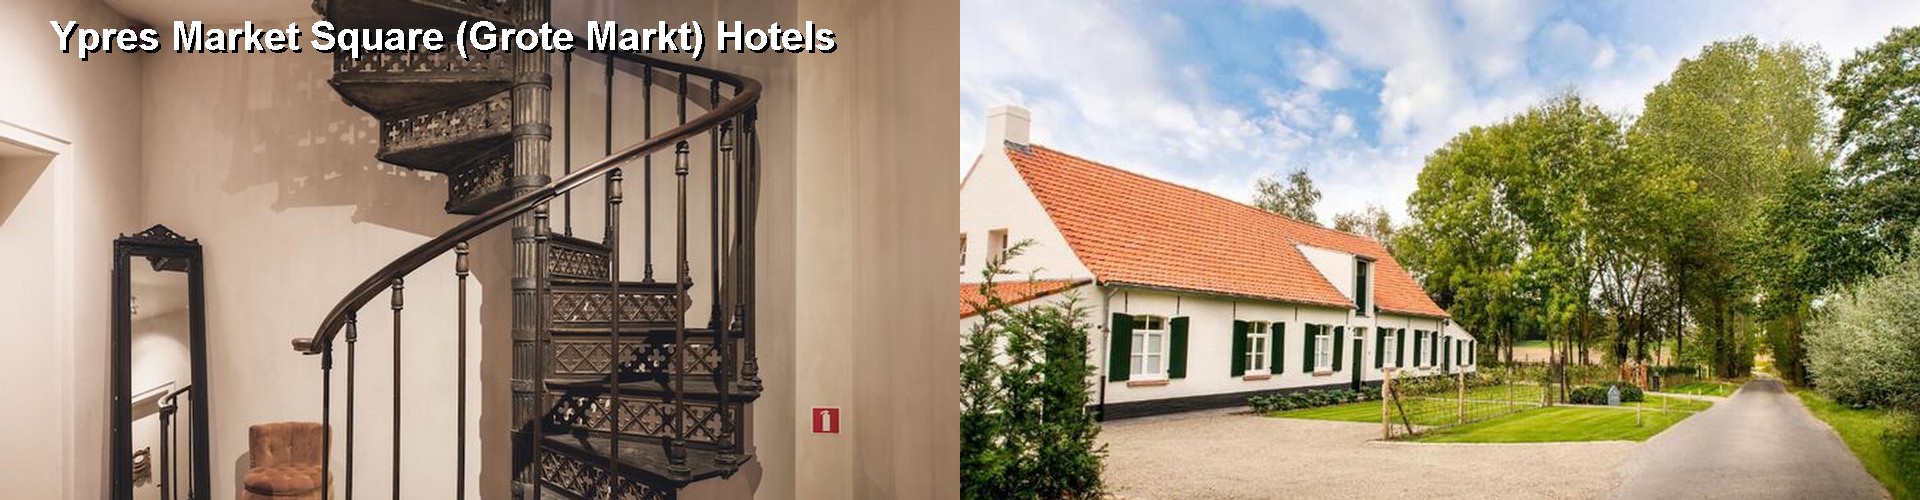 5 Best Hotels near Ypres Market Square (Grote Markt)